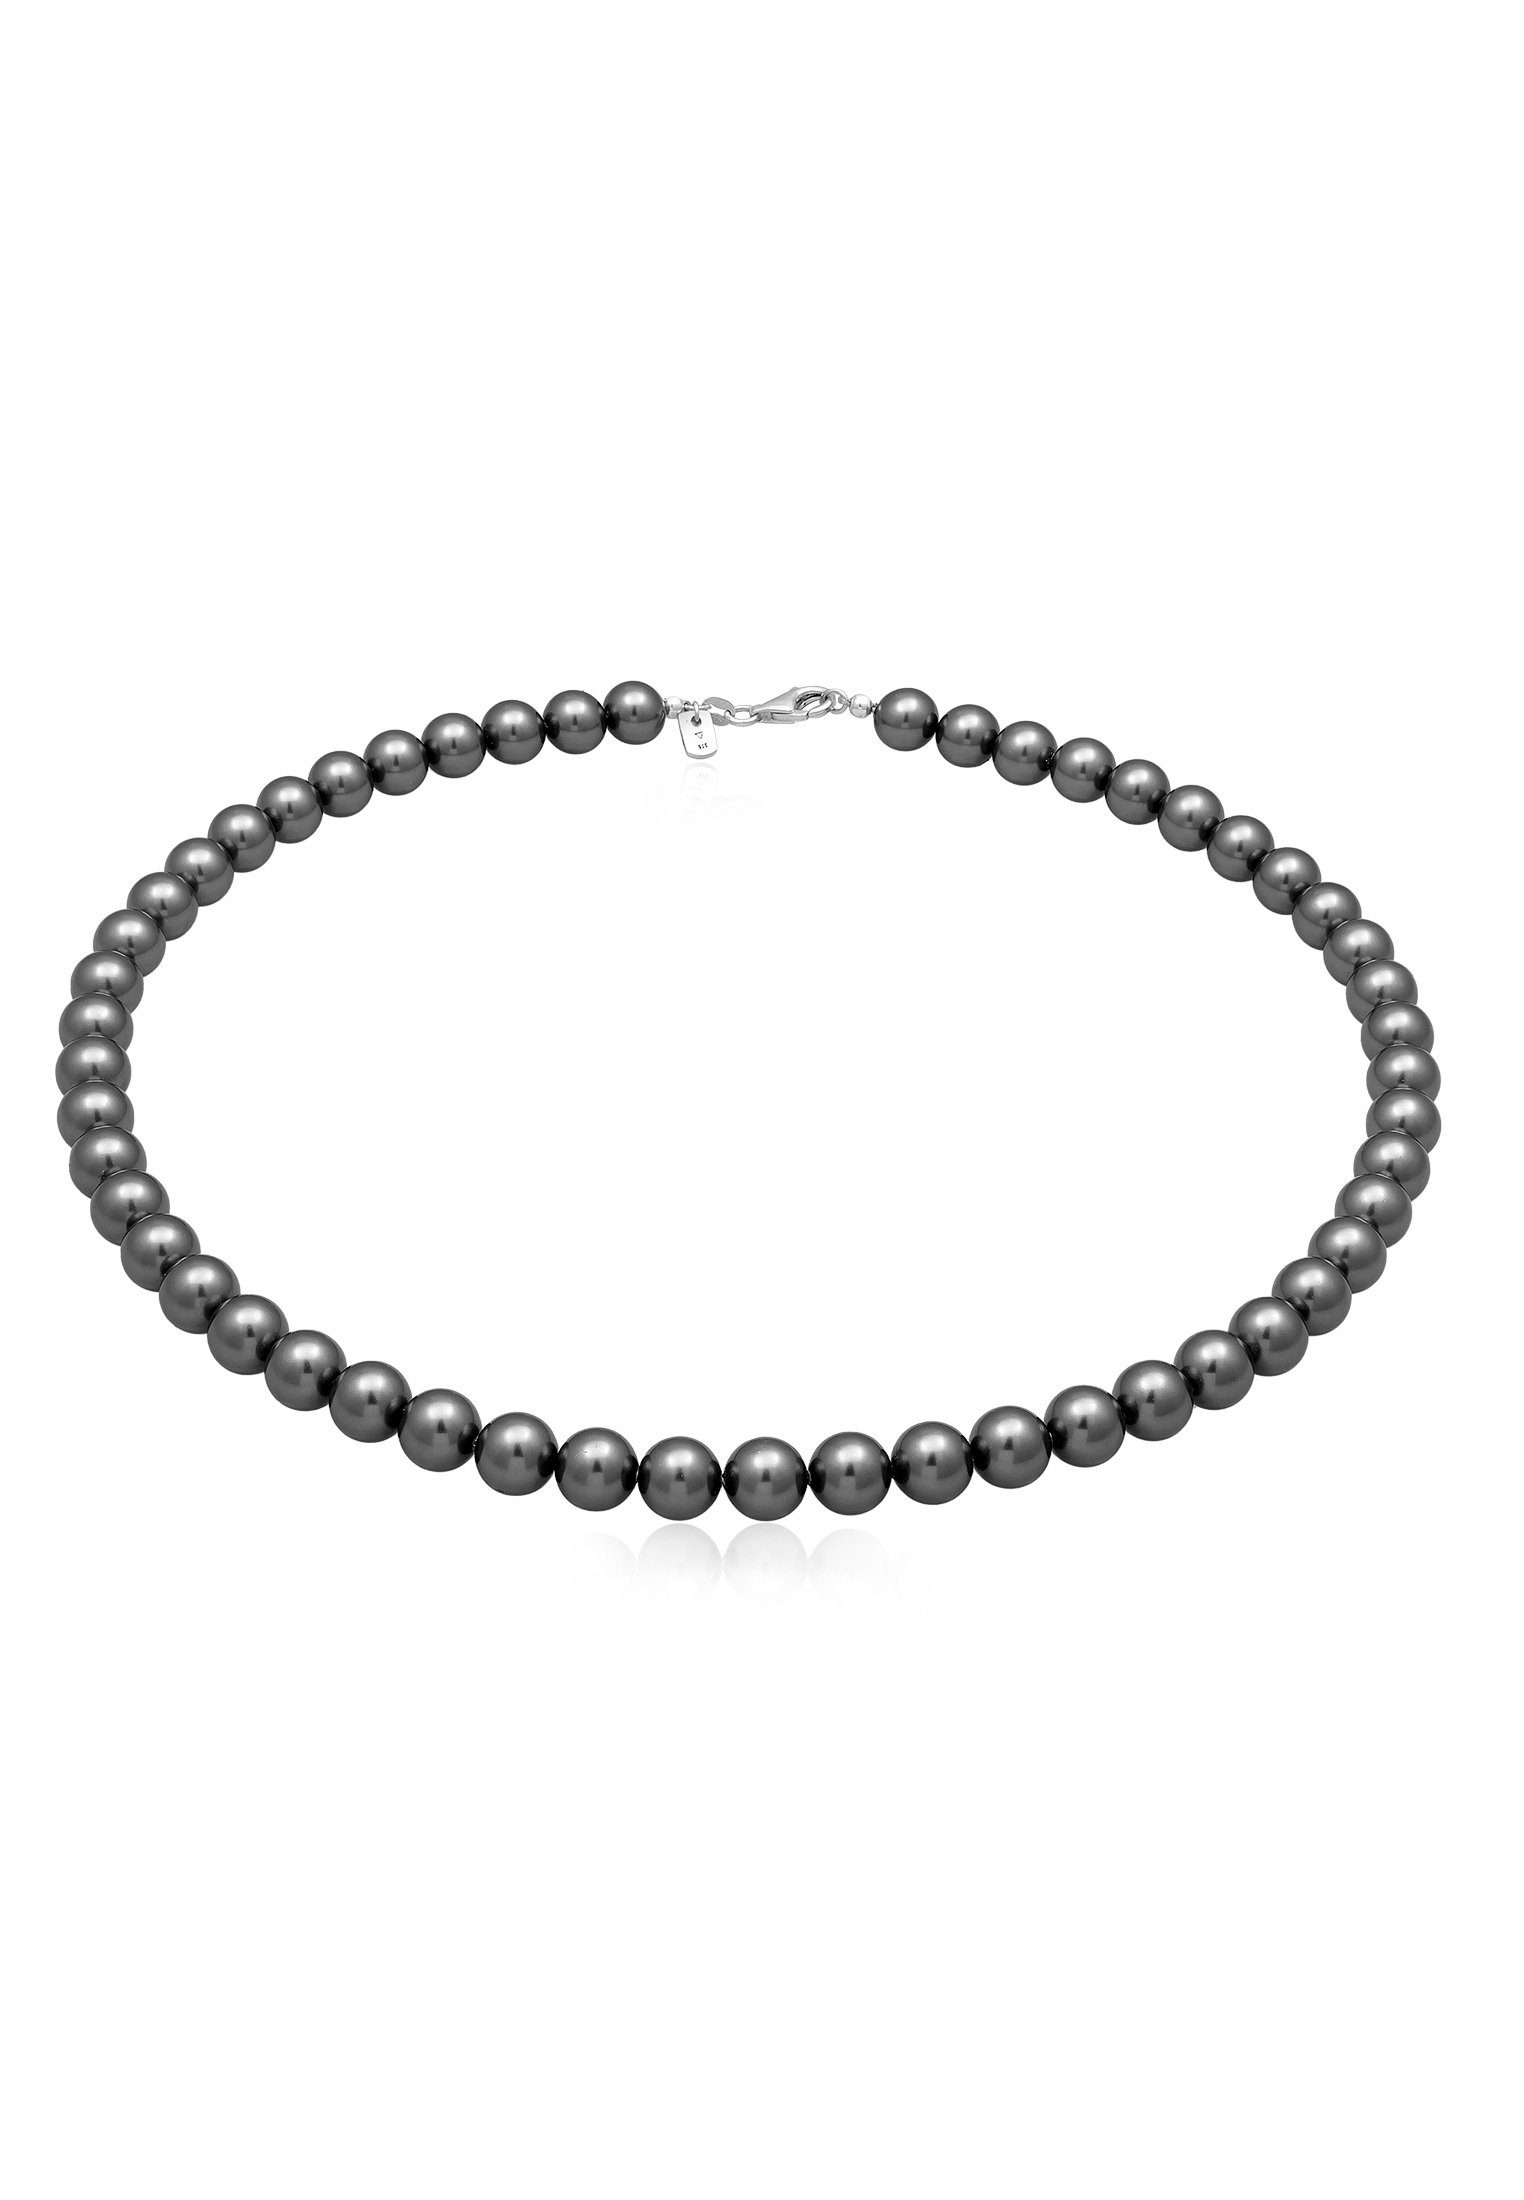 Kuzzoi Silberkette Herren Perlenkette synthetische Perlen 925 Silber | Silberketten